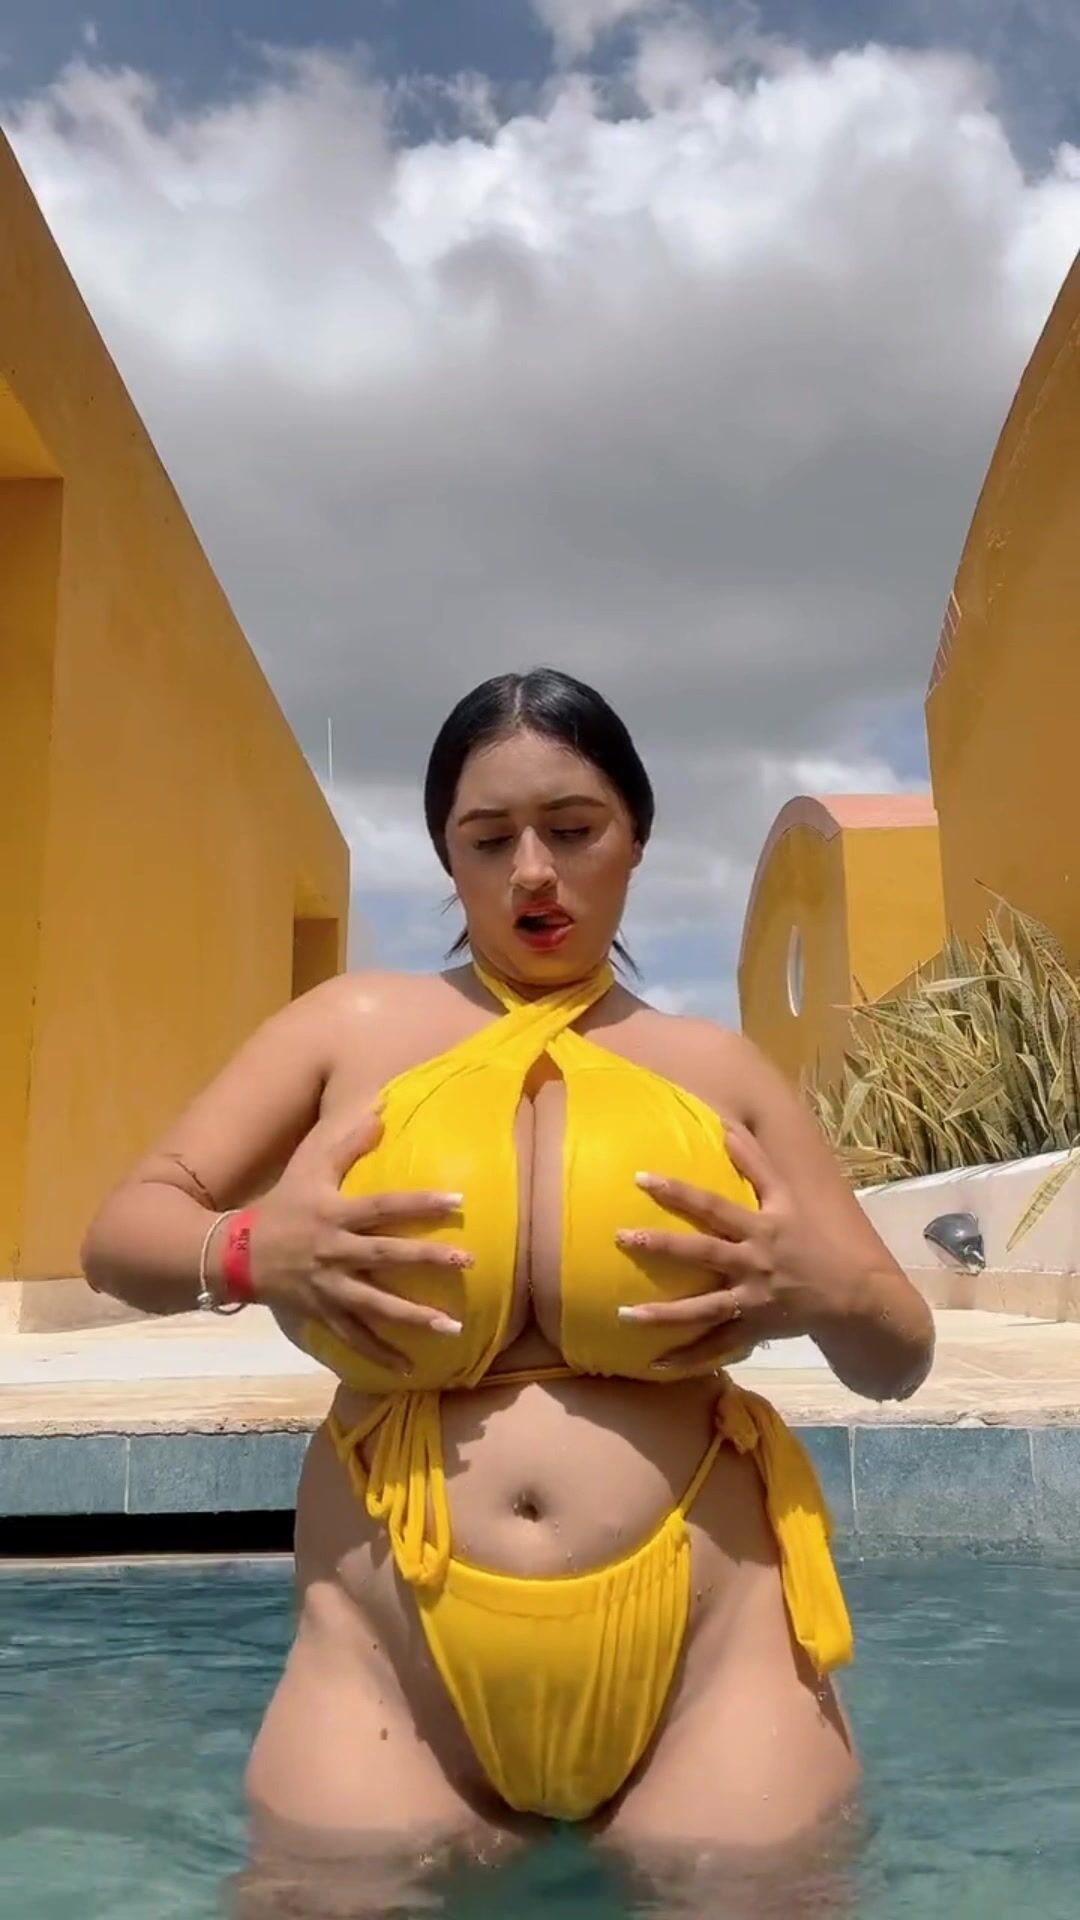 Roberta Lipa - Yellow Bikini Like A Big TONKA Toy - Good Filter enhance boobs Stay Tune for more!!!!